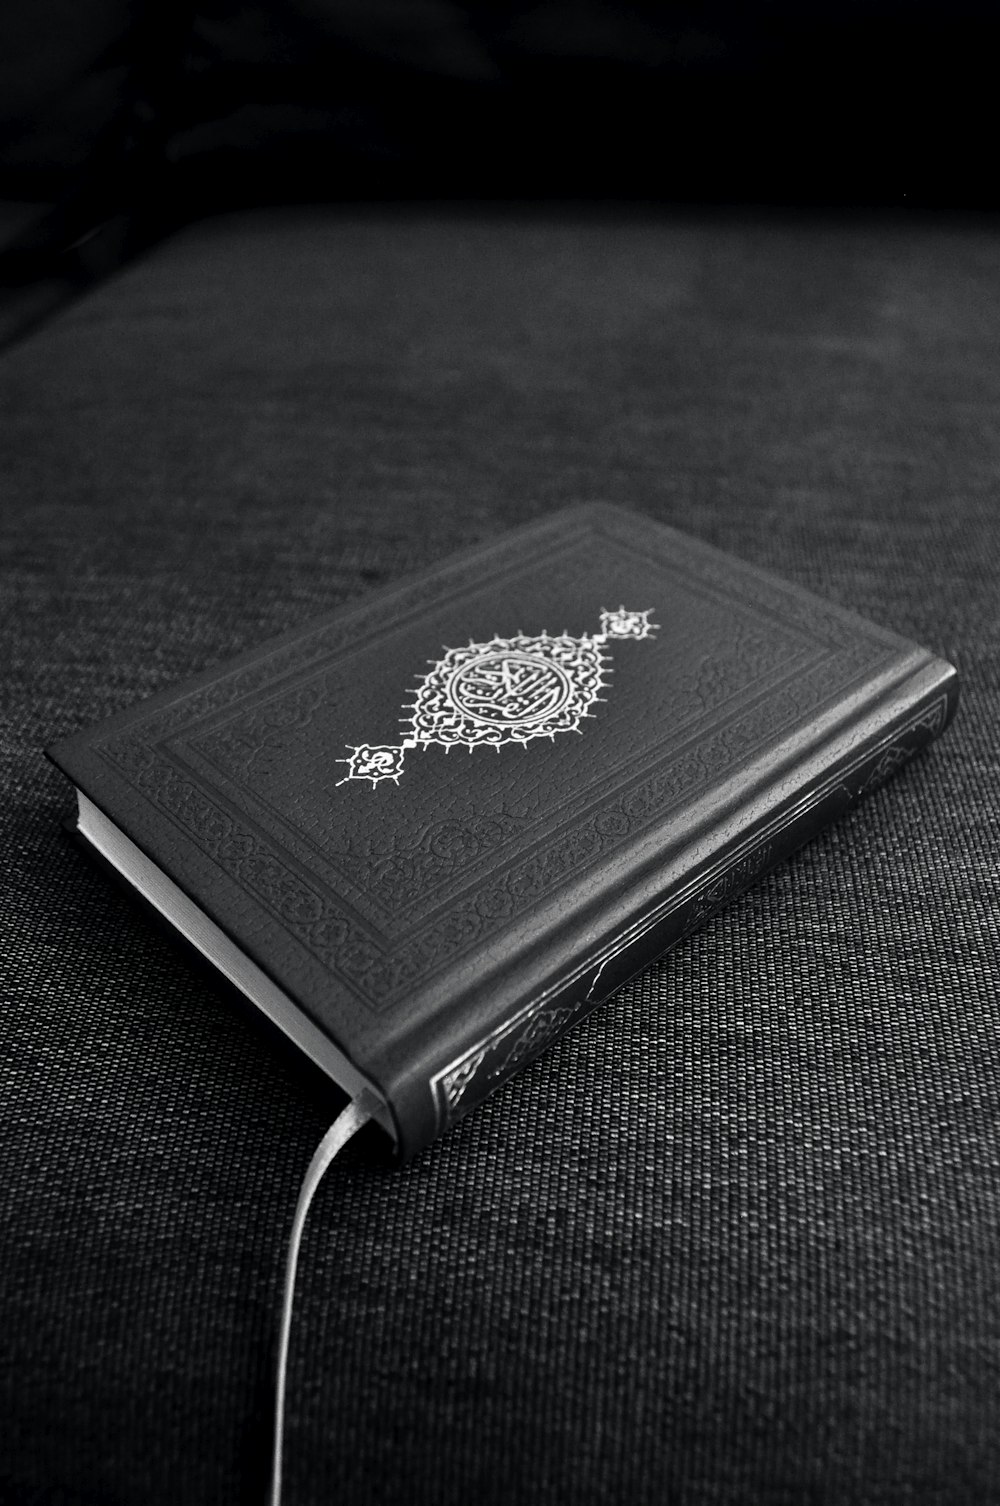 black and white hardbound book